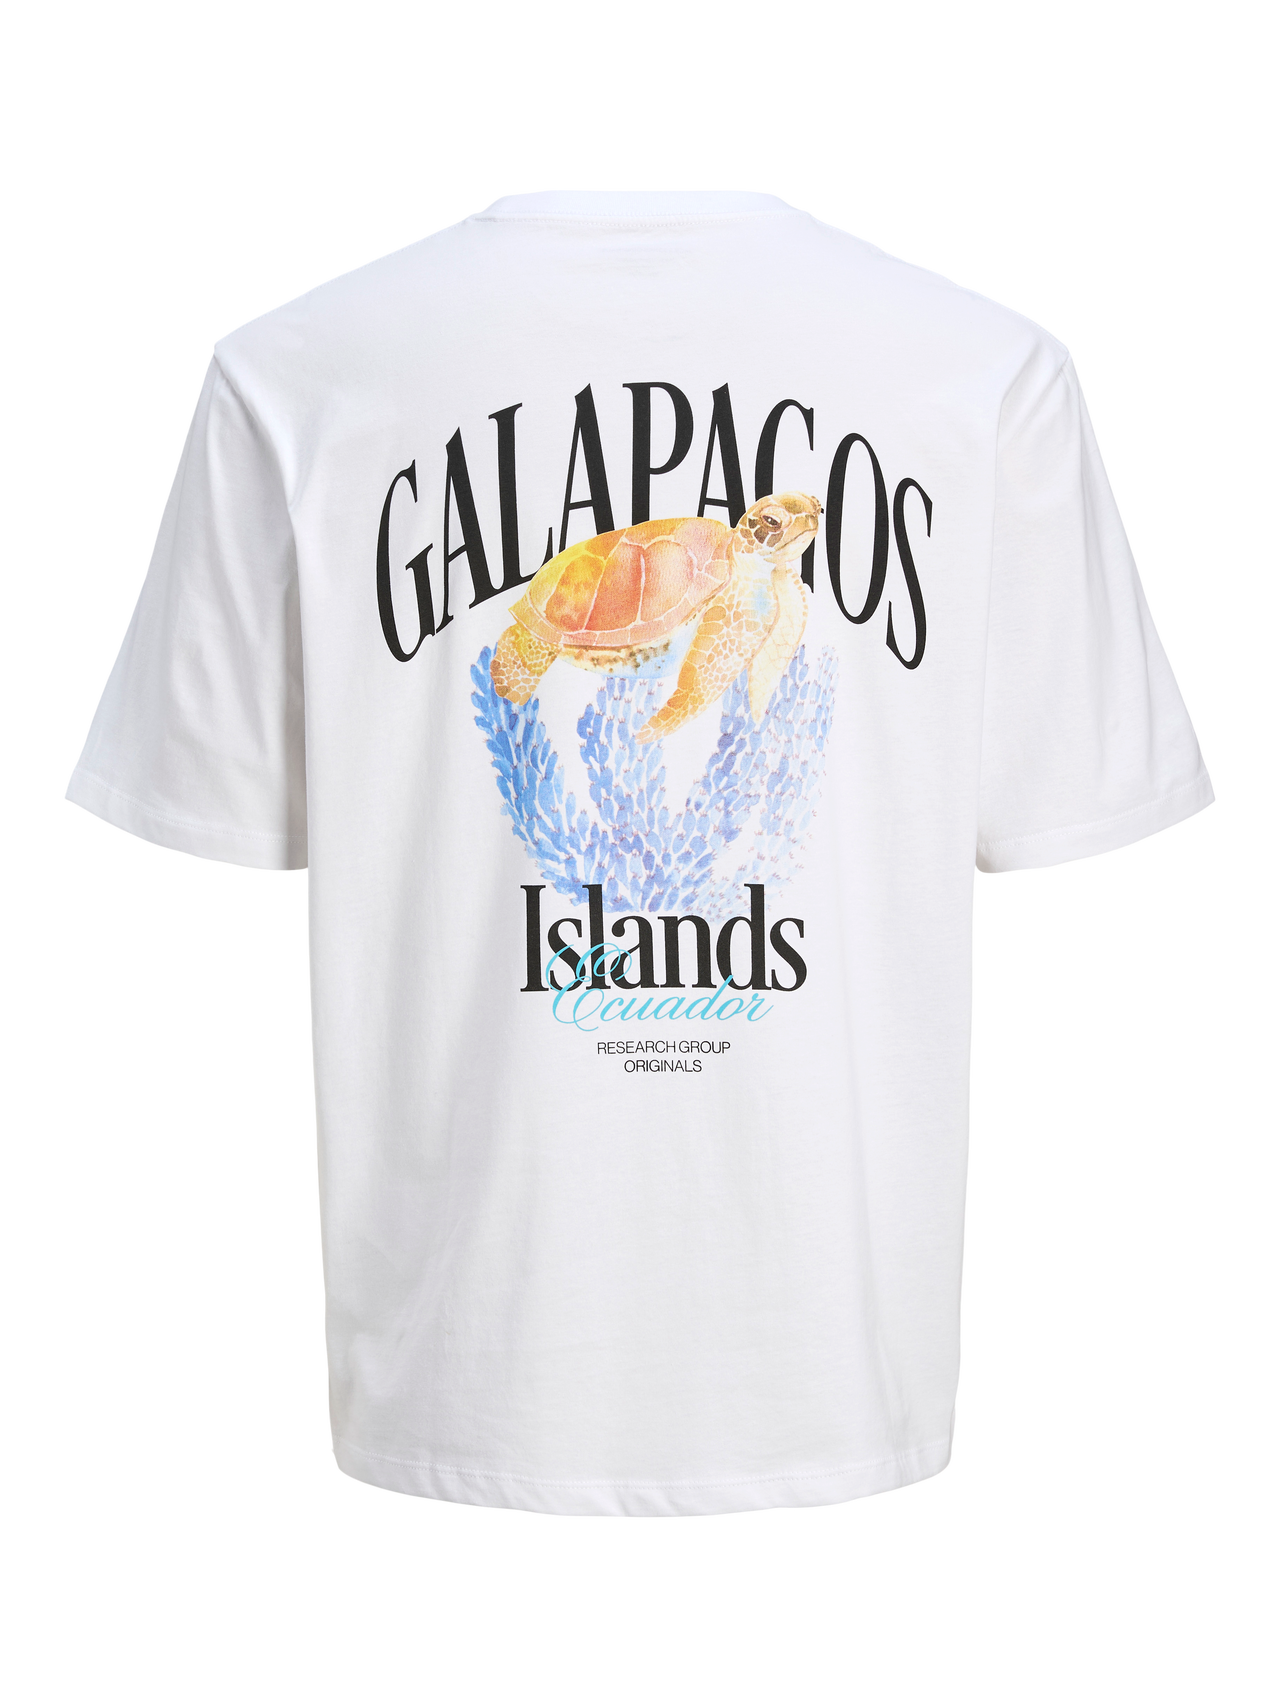 Jack & Jones Plus Size Z logo T-shirt -Bright White - 12270151